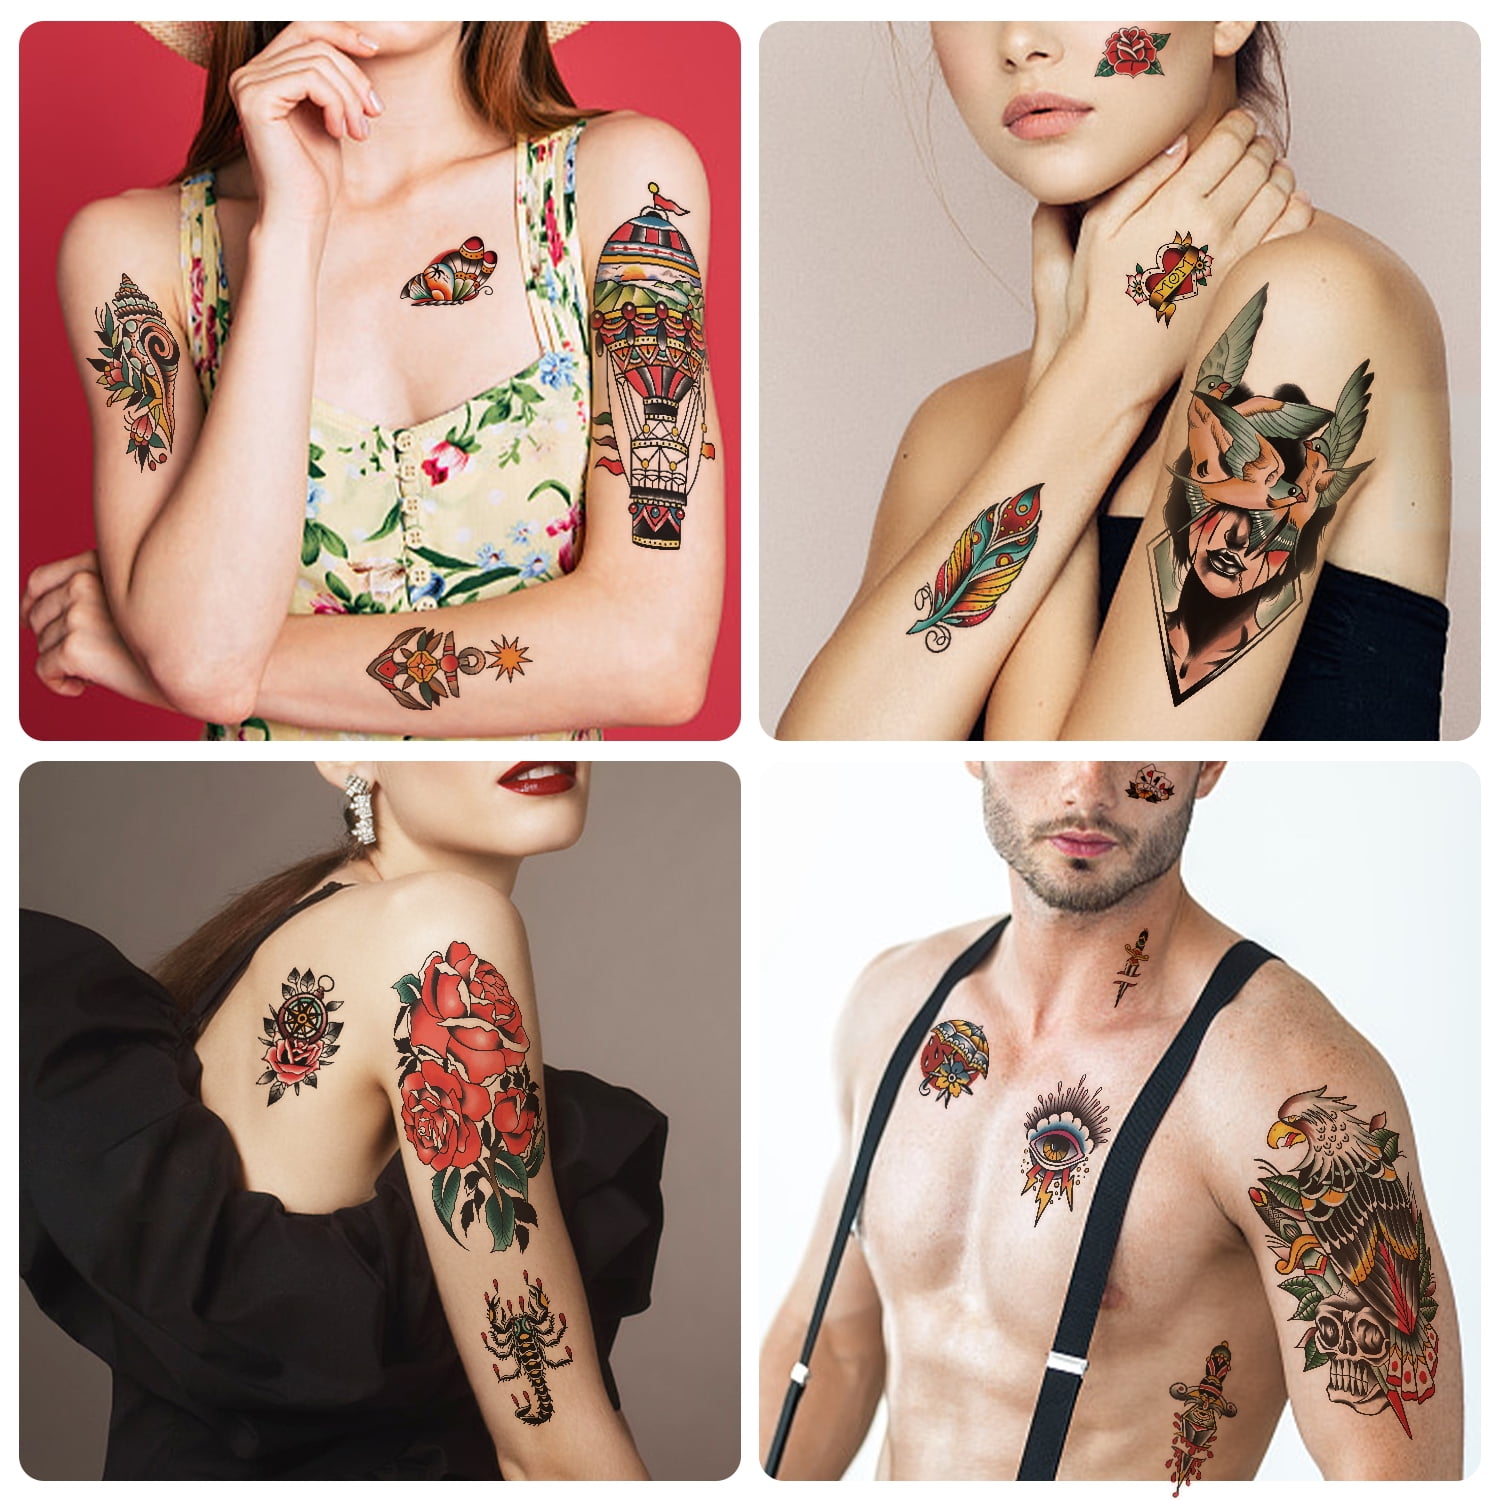 Legendary Tattoo Artist Jonathan Shaw Explains His OldSchool Obsession